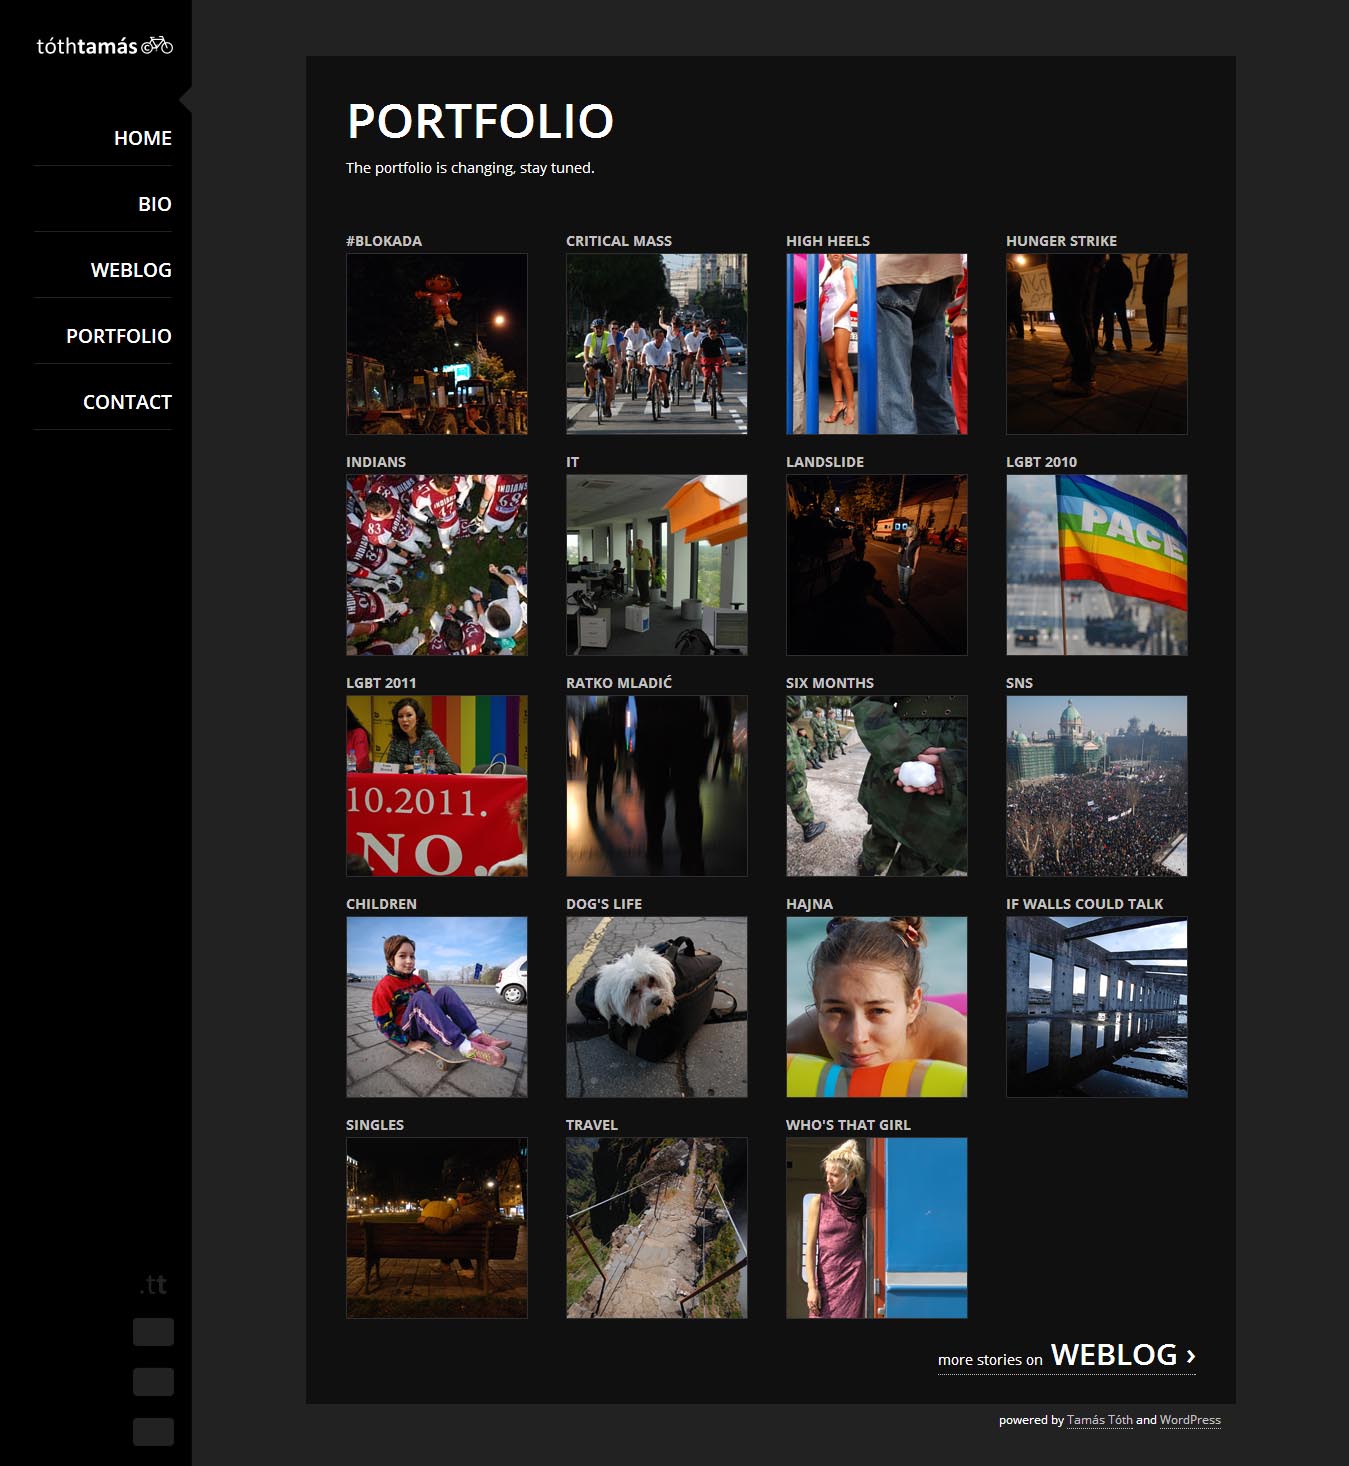 The old portfolio on the tothtamas.tt website